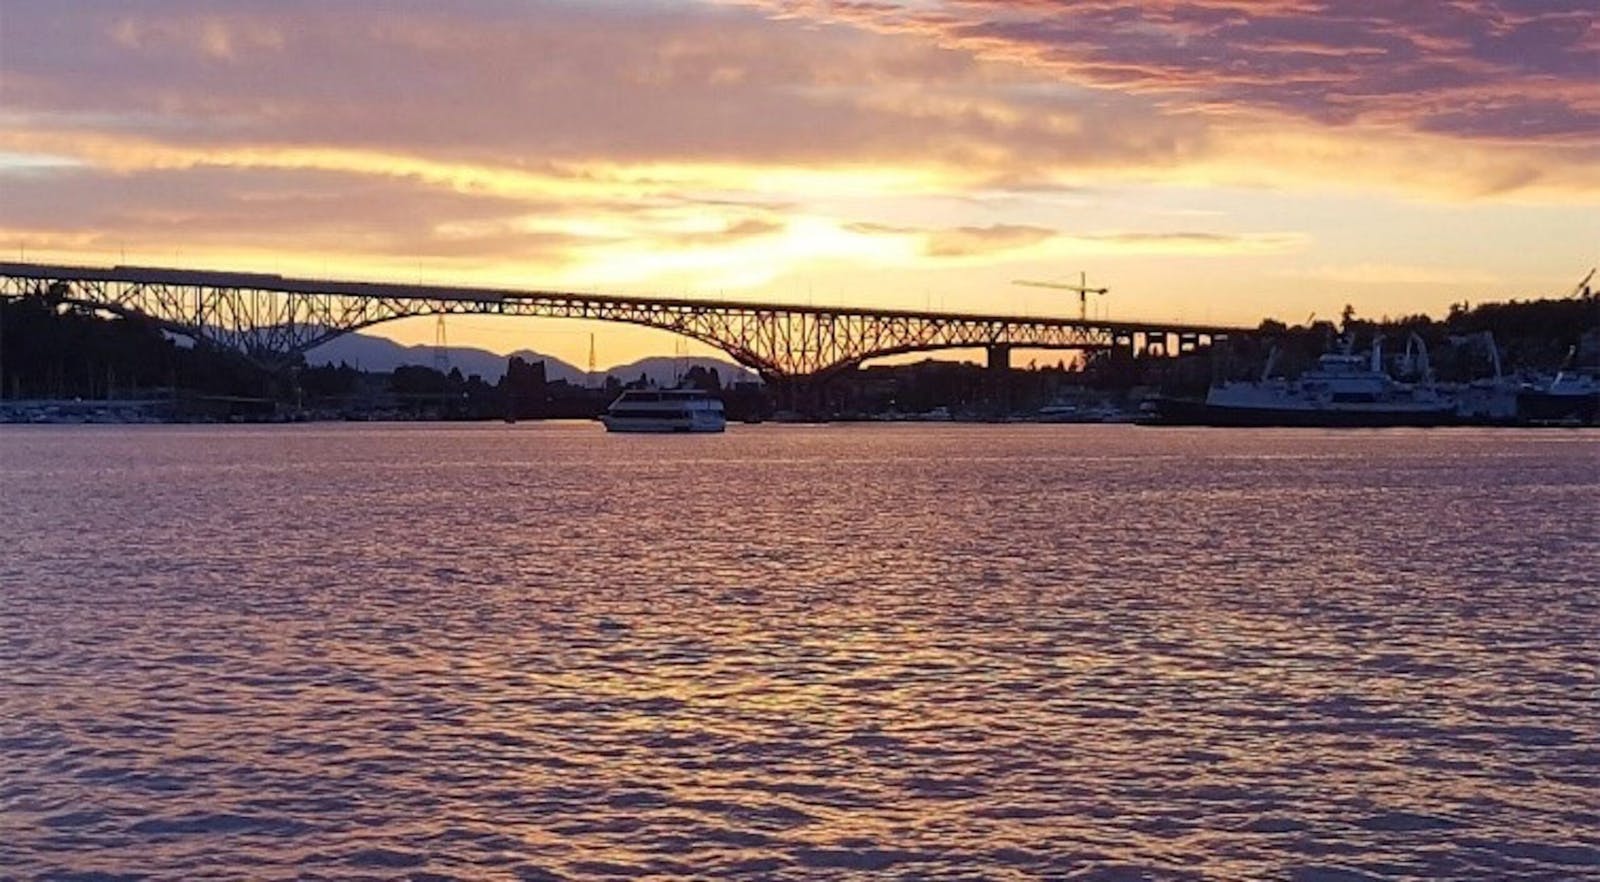 Auroa Bridge at sunset